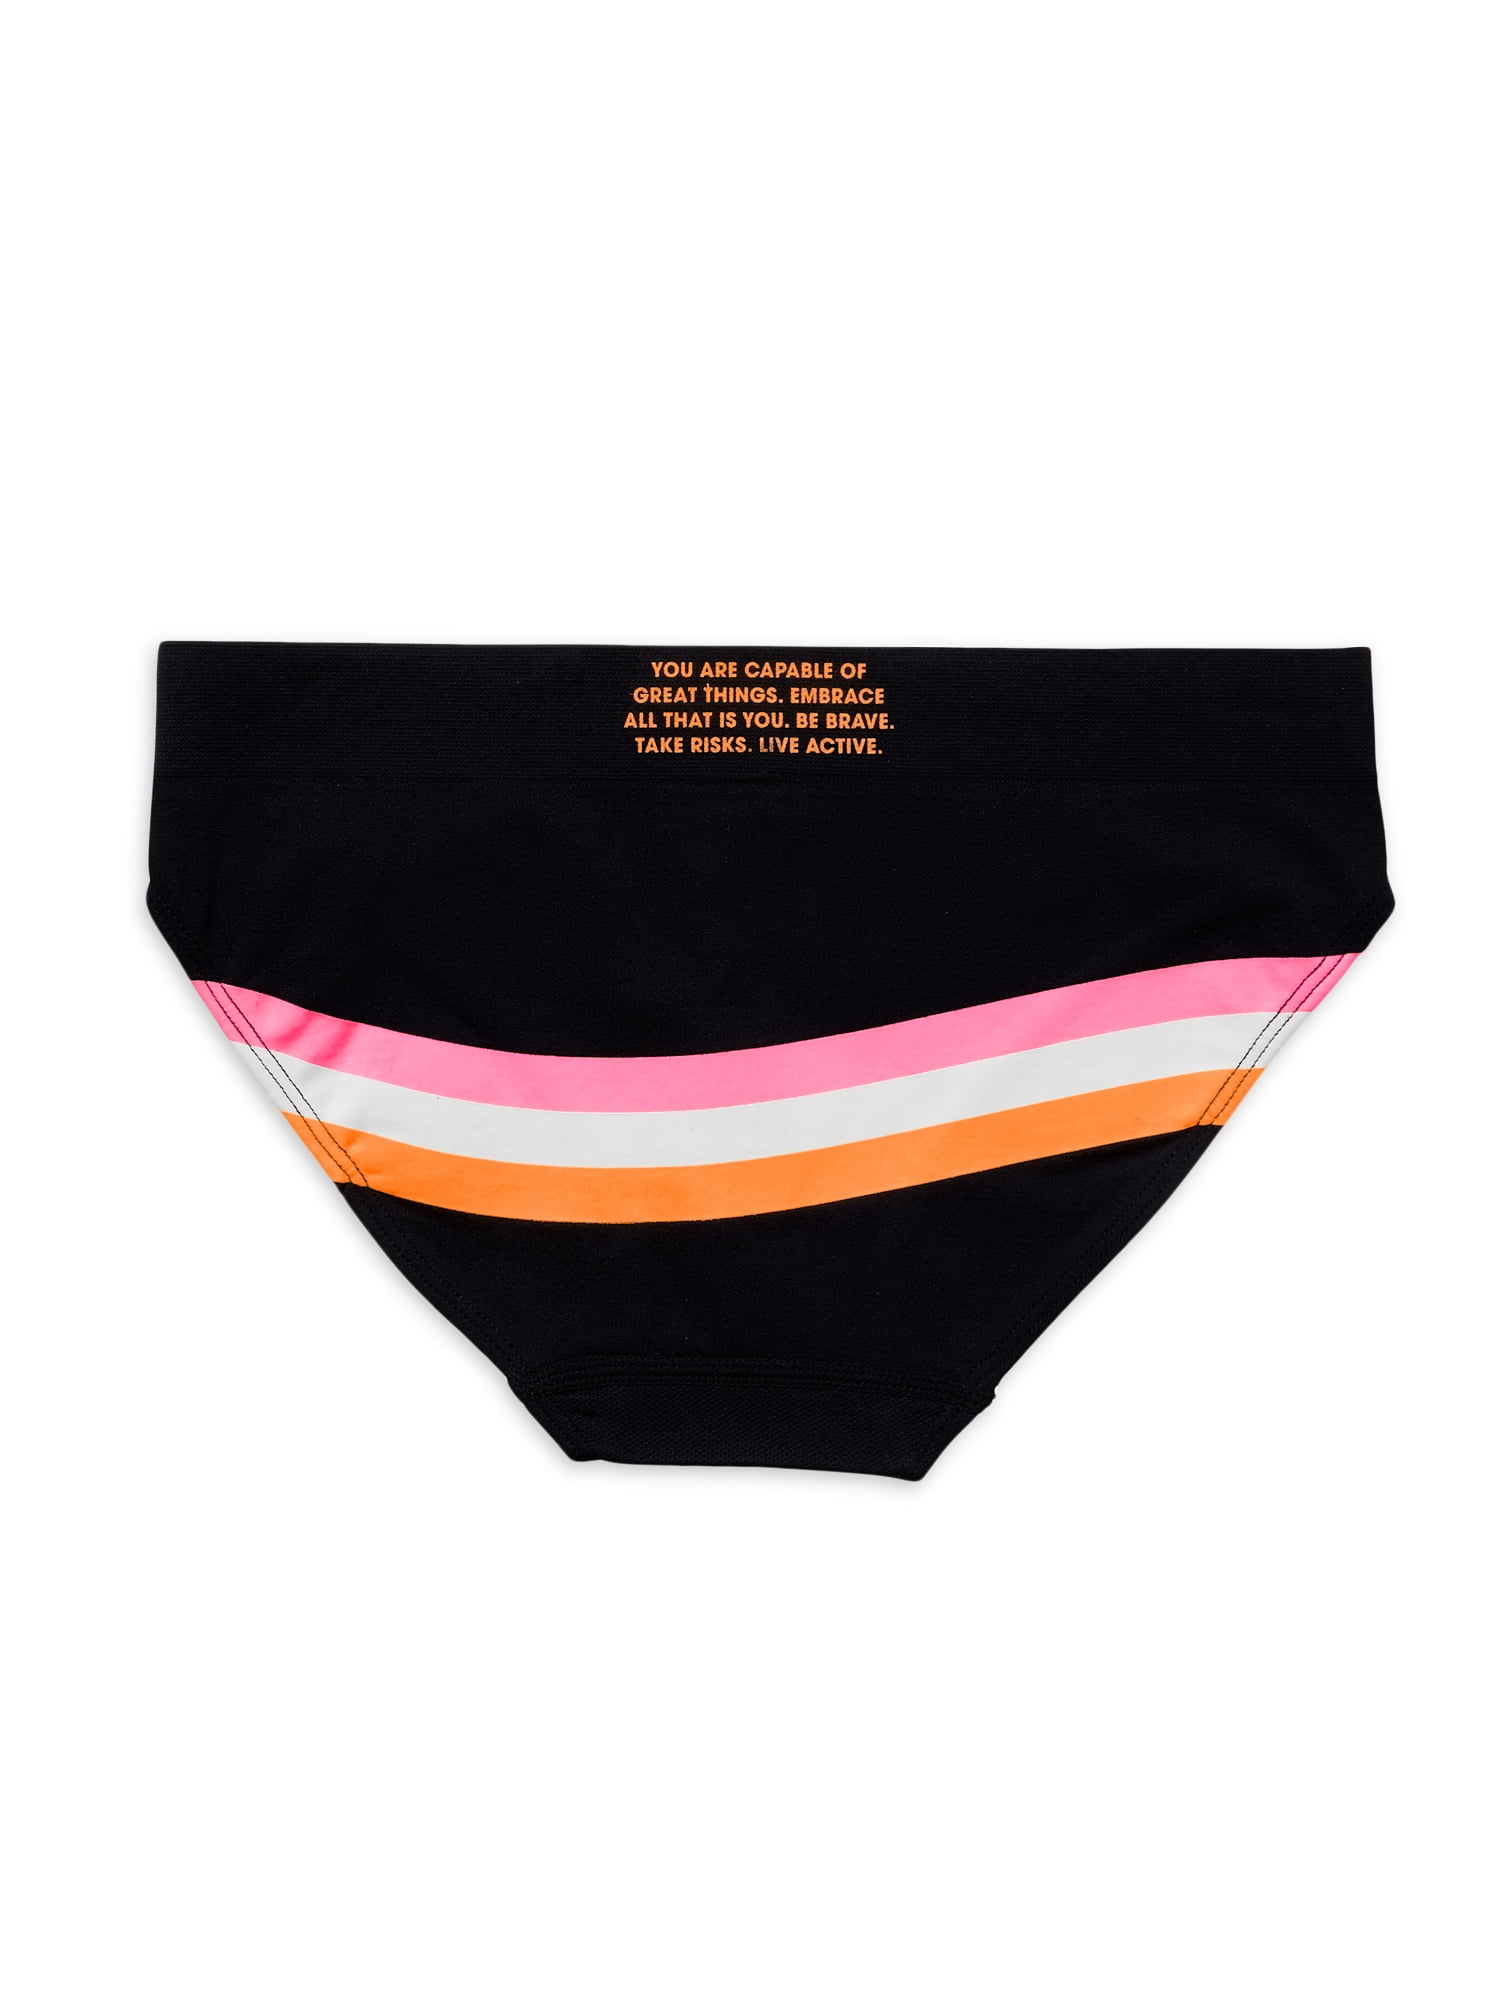 Motley stainless spell Justice Girls Nylon Spandex Bikini Underwear, 5-Pack Sizes 6-16 -  Walmart.com